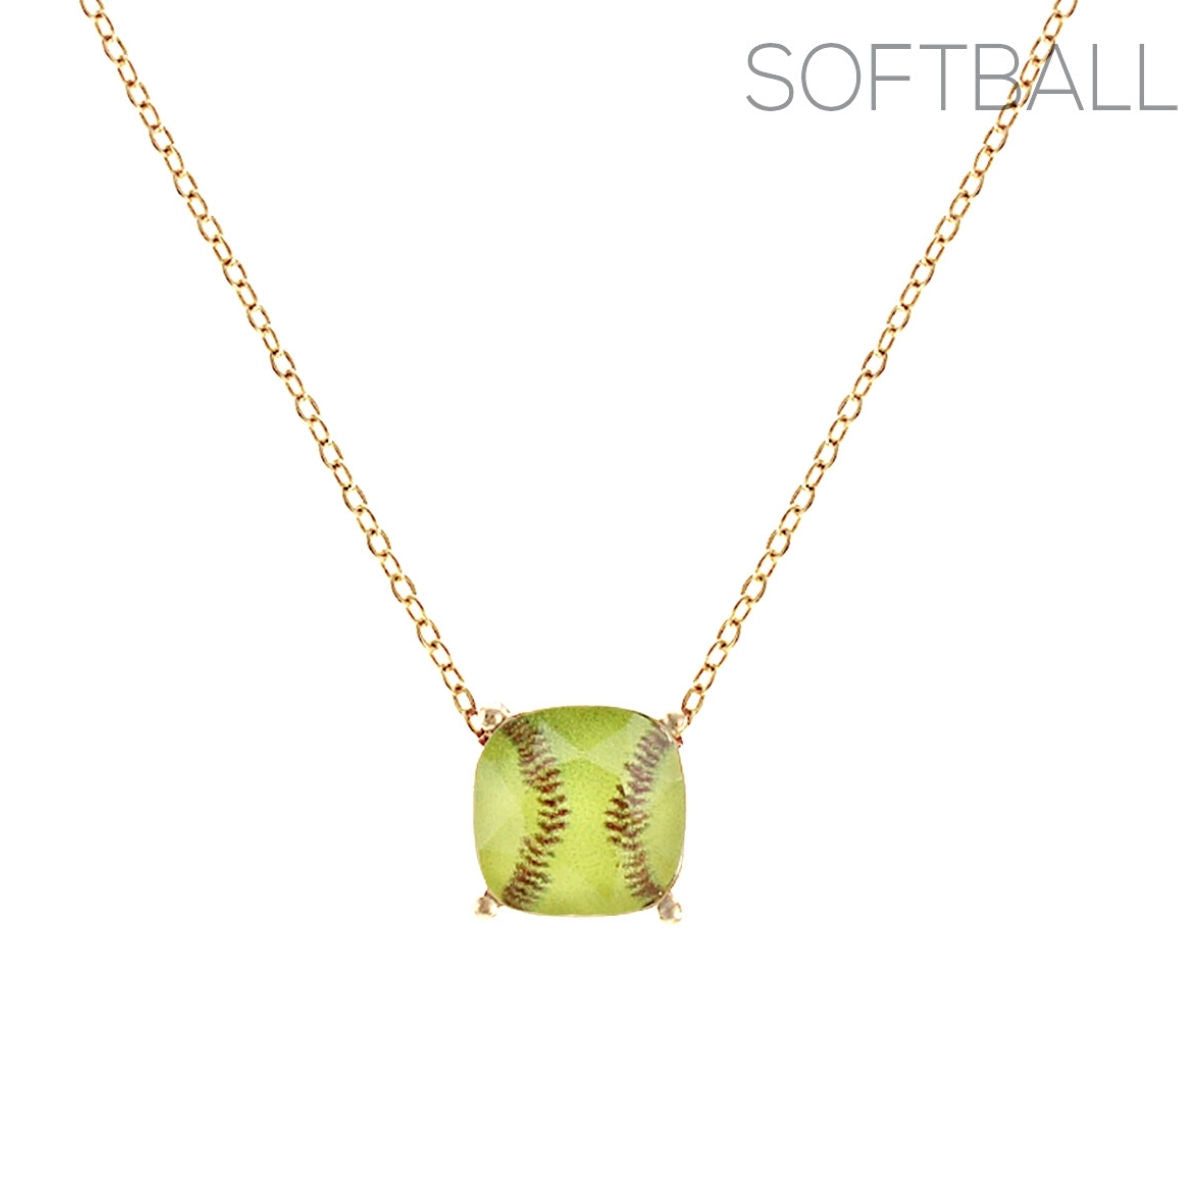 Gold Softball Cushion Cut Necklace